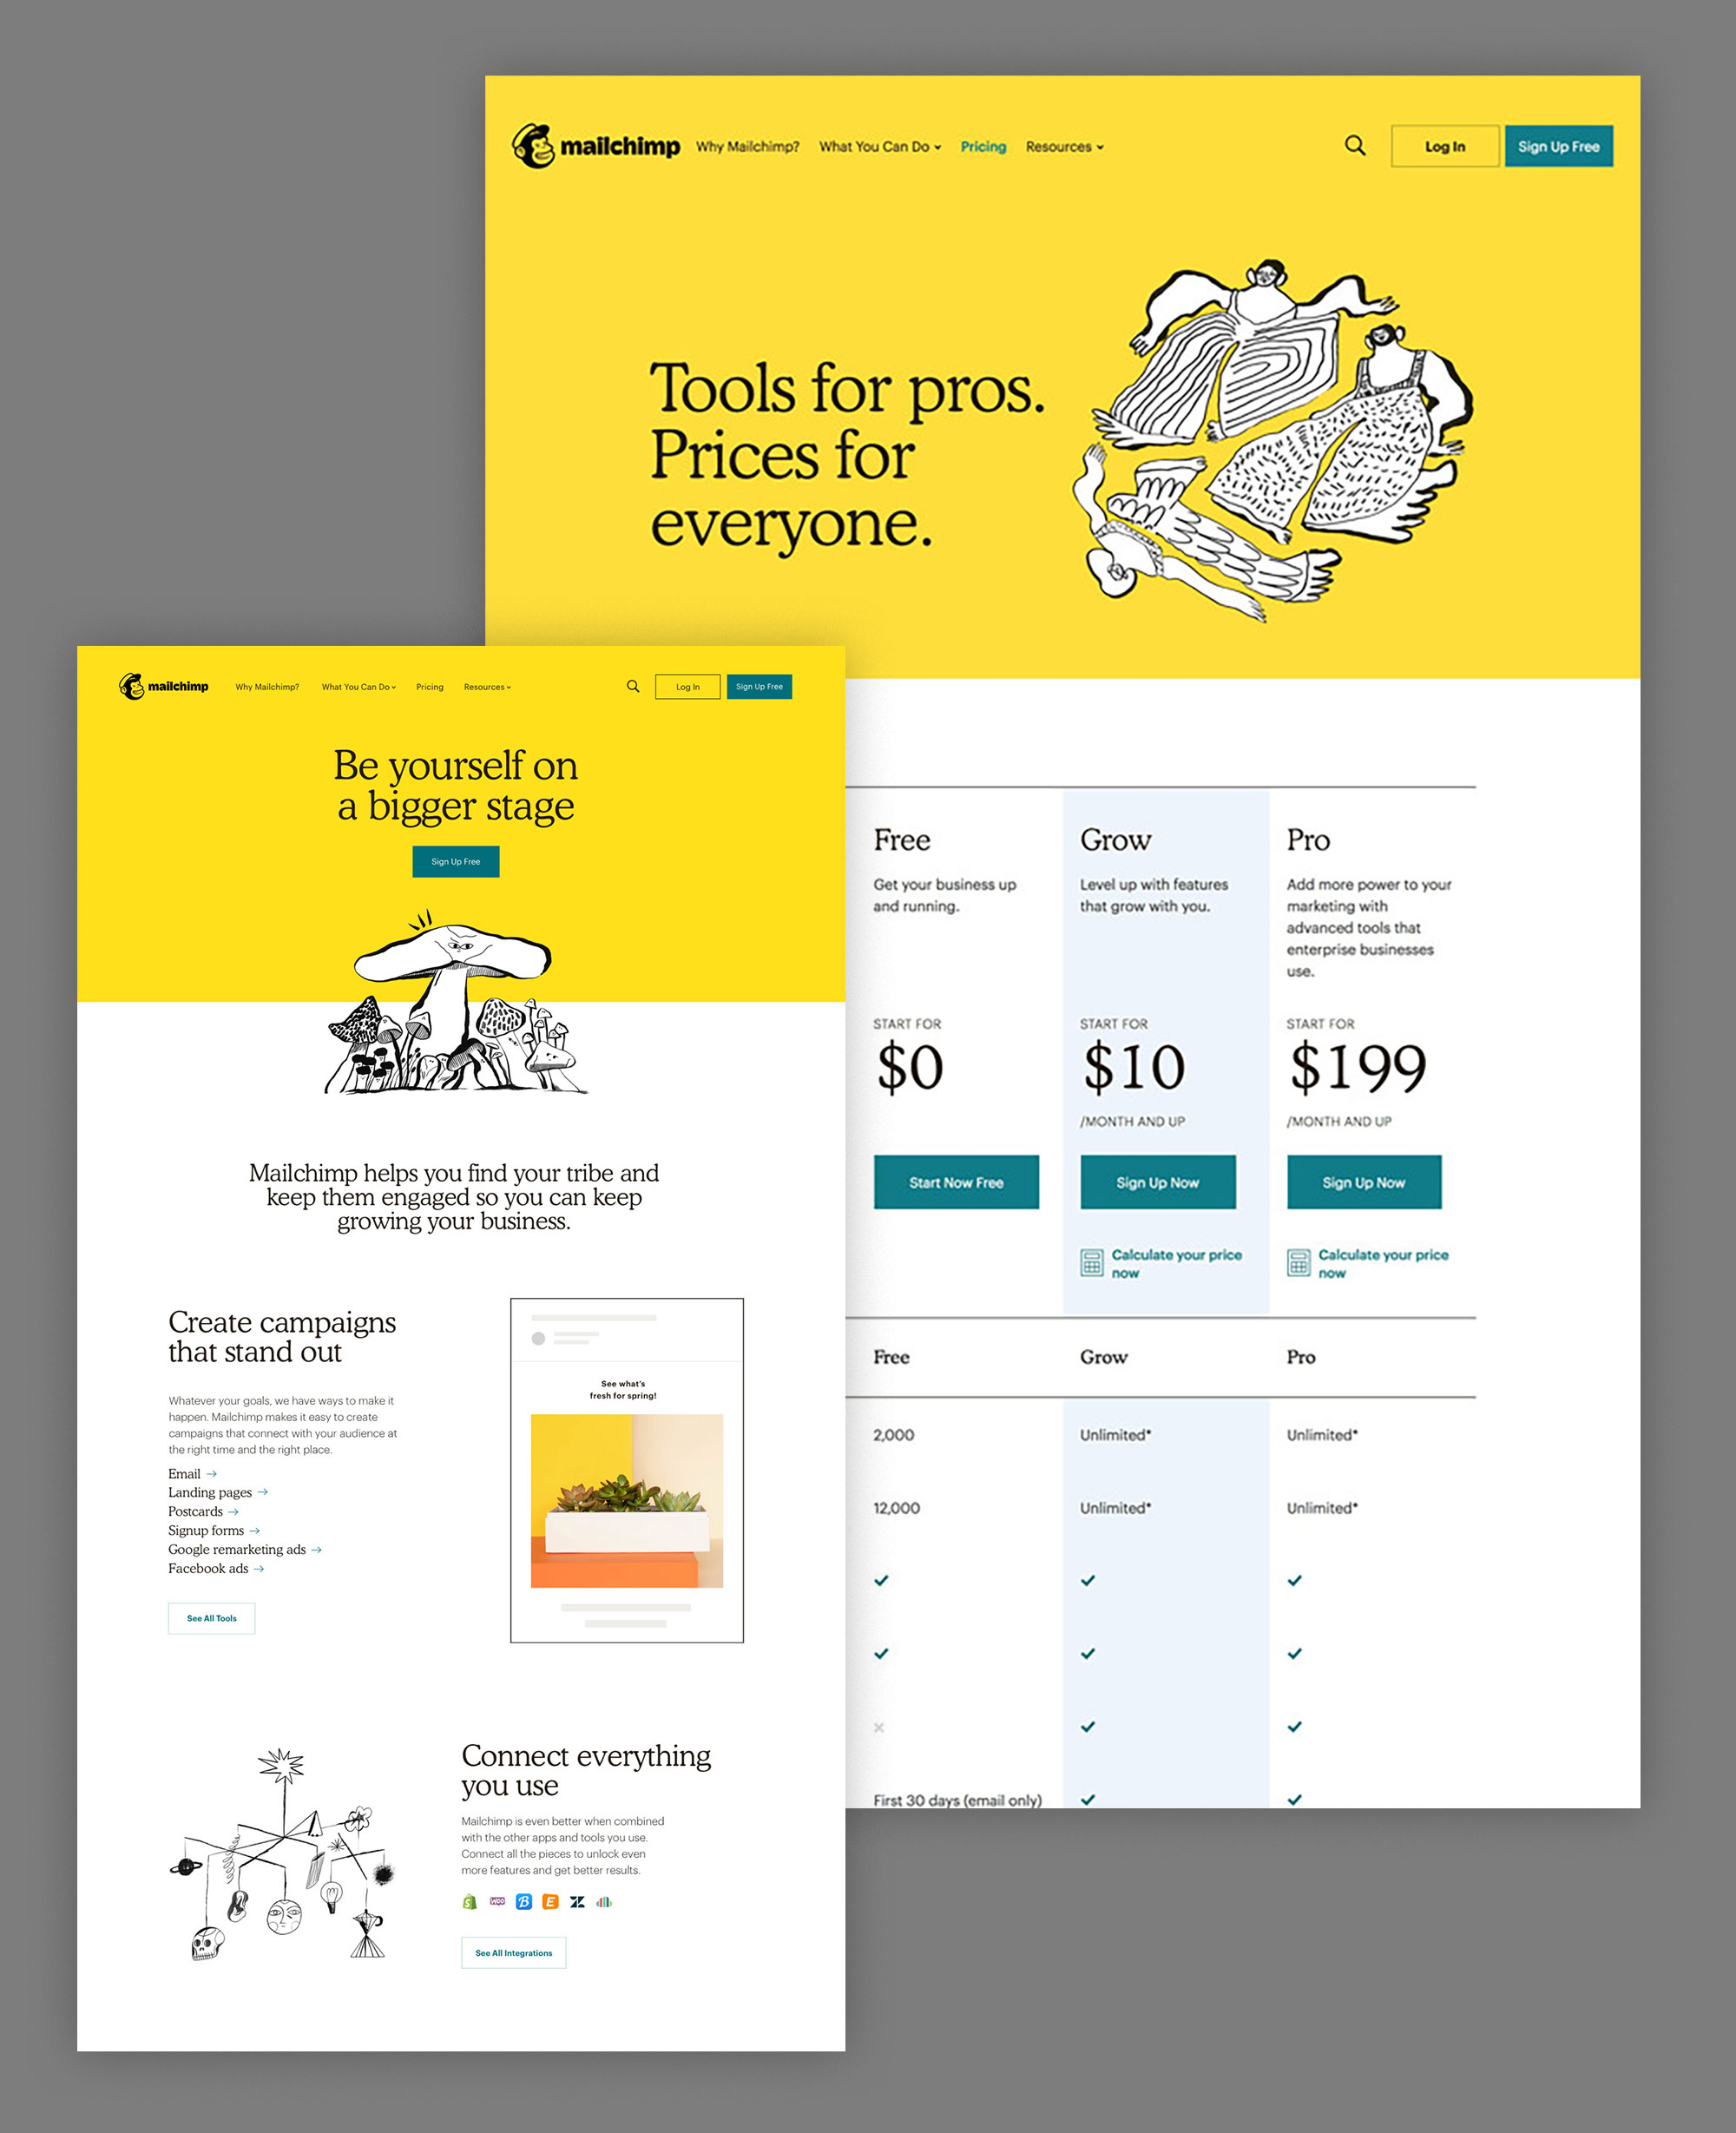 A few page designs of Mailchimp's website